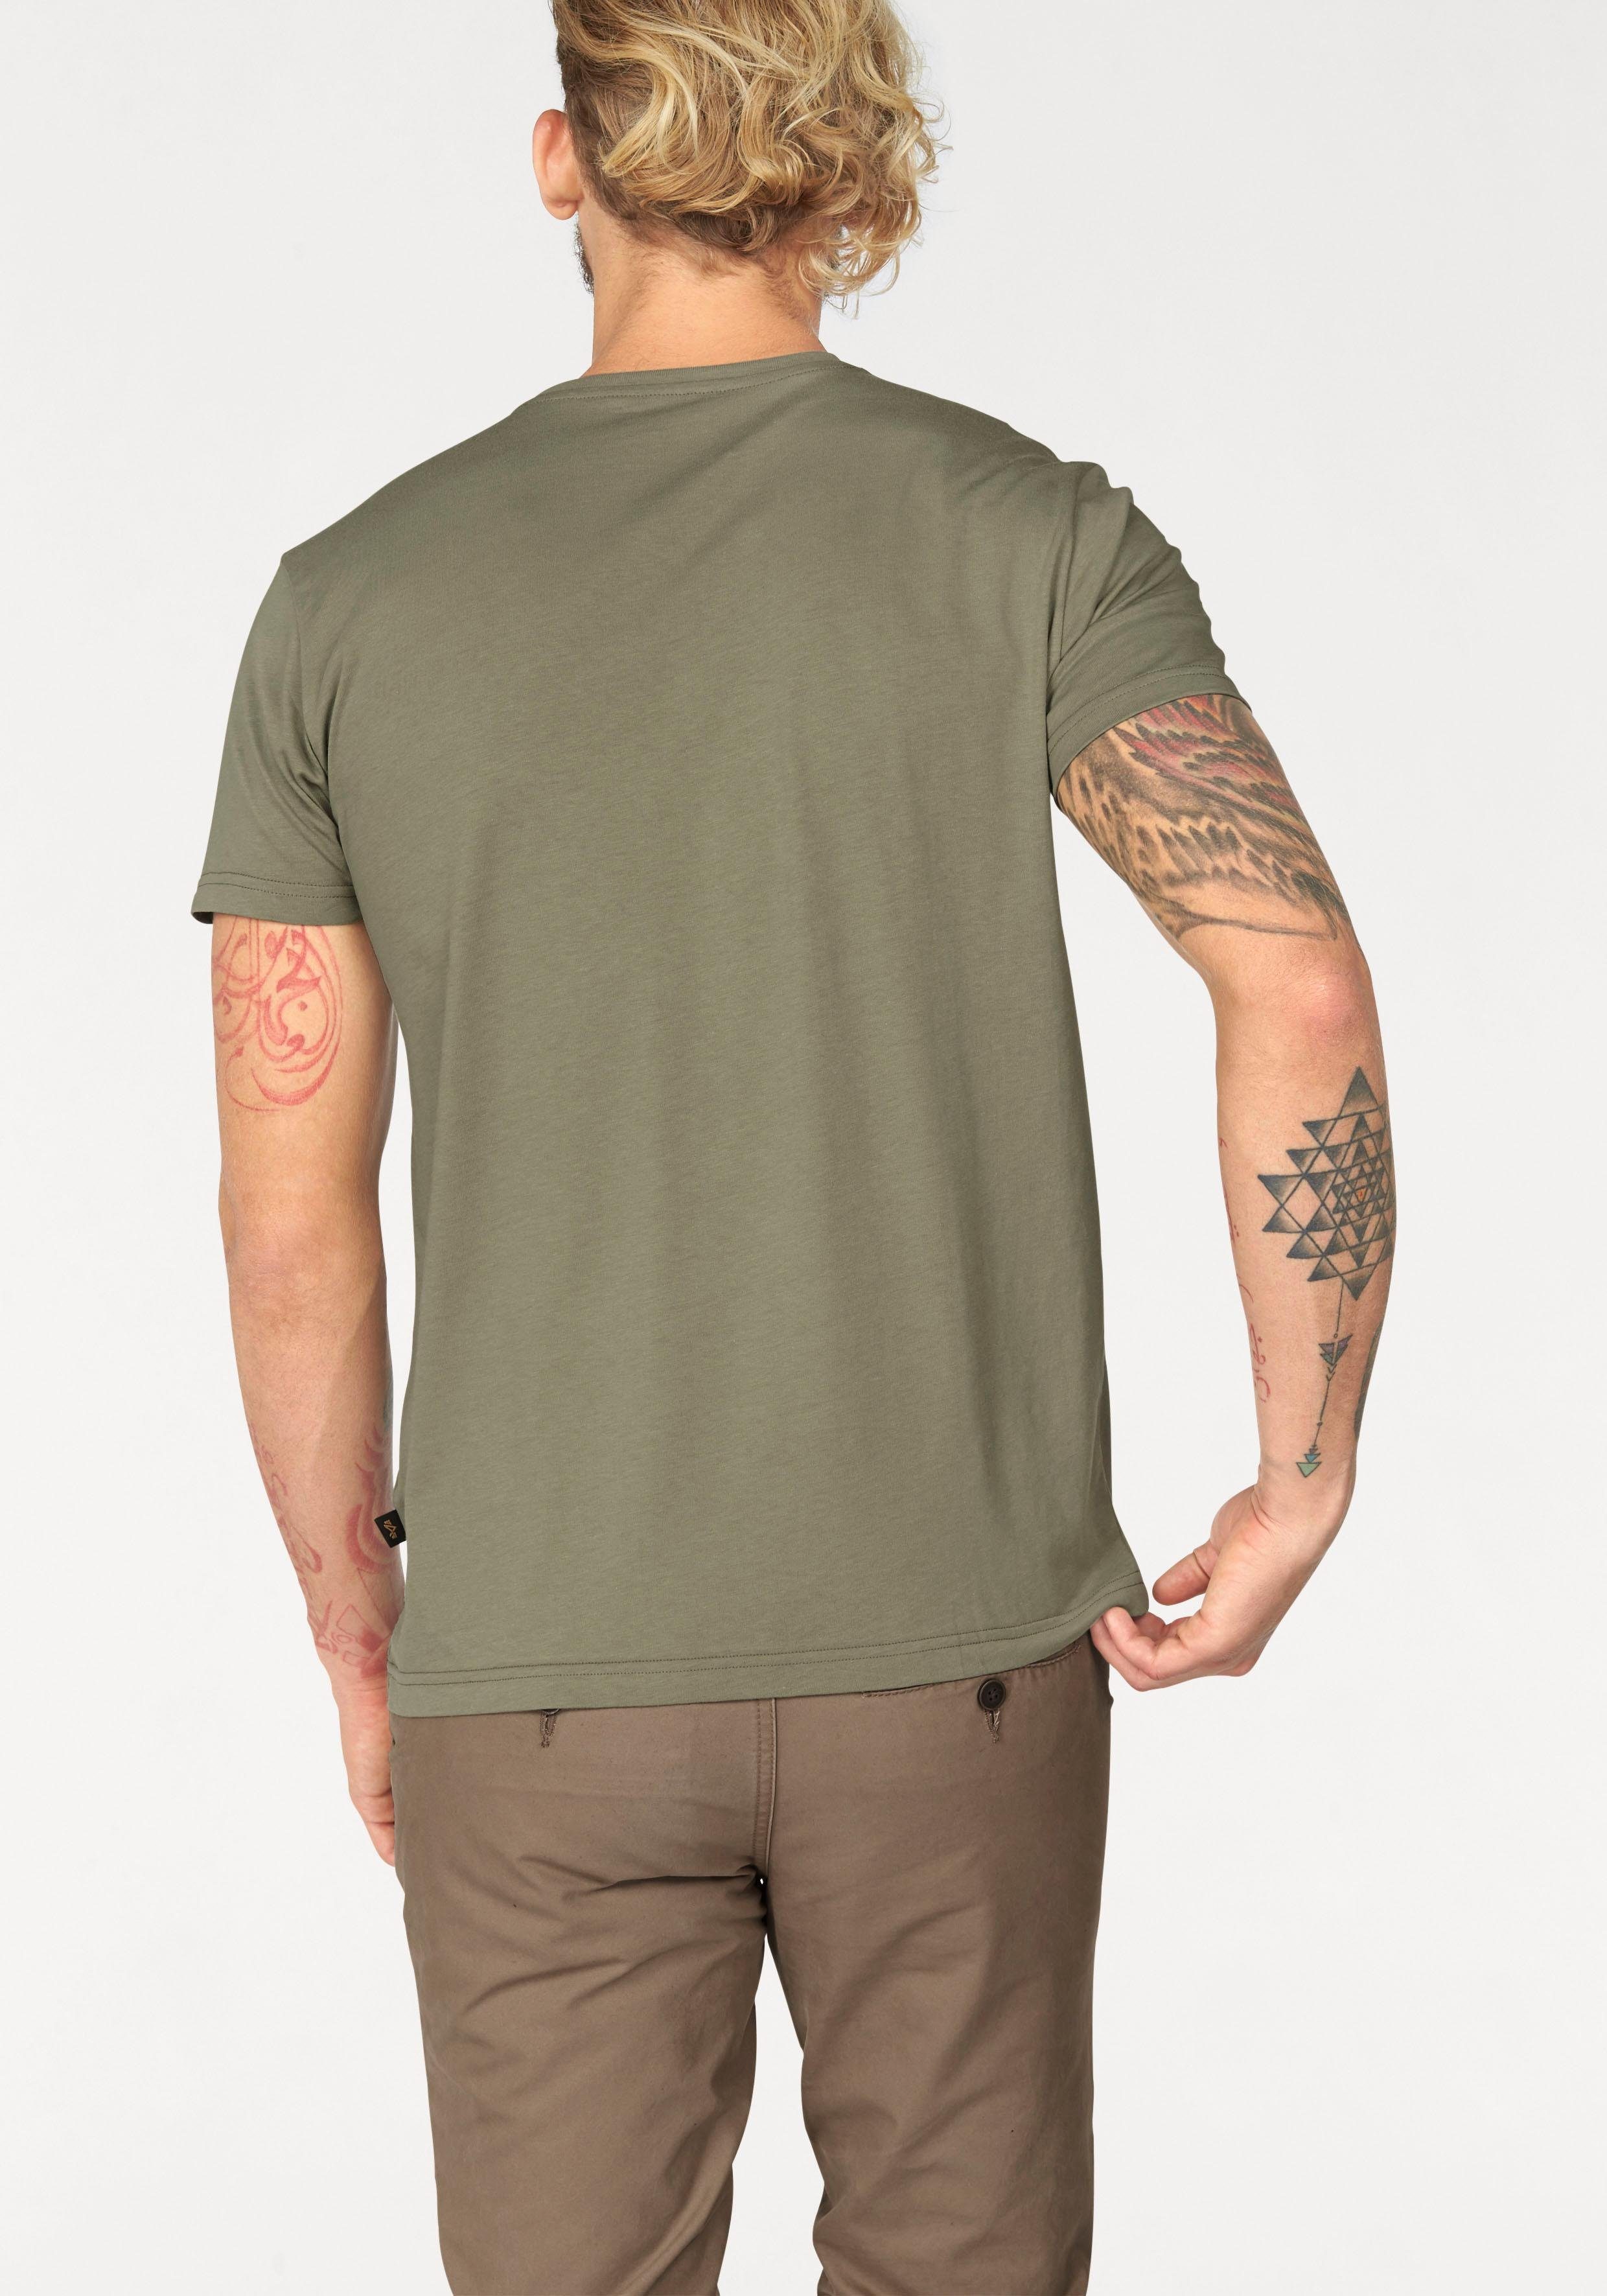 T-Shirt Alpha Industries T-Shirt Basic olive